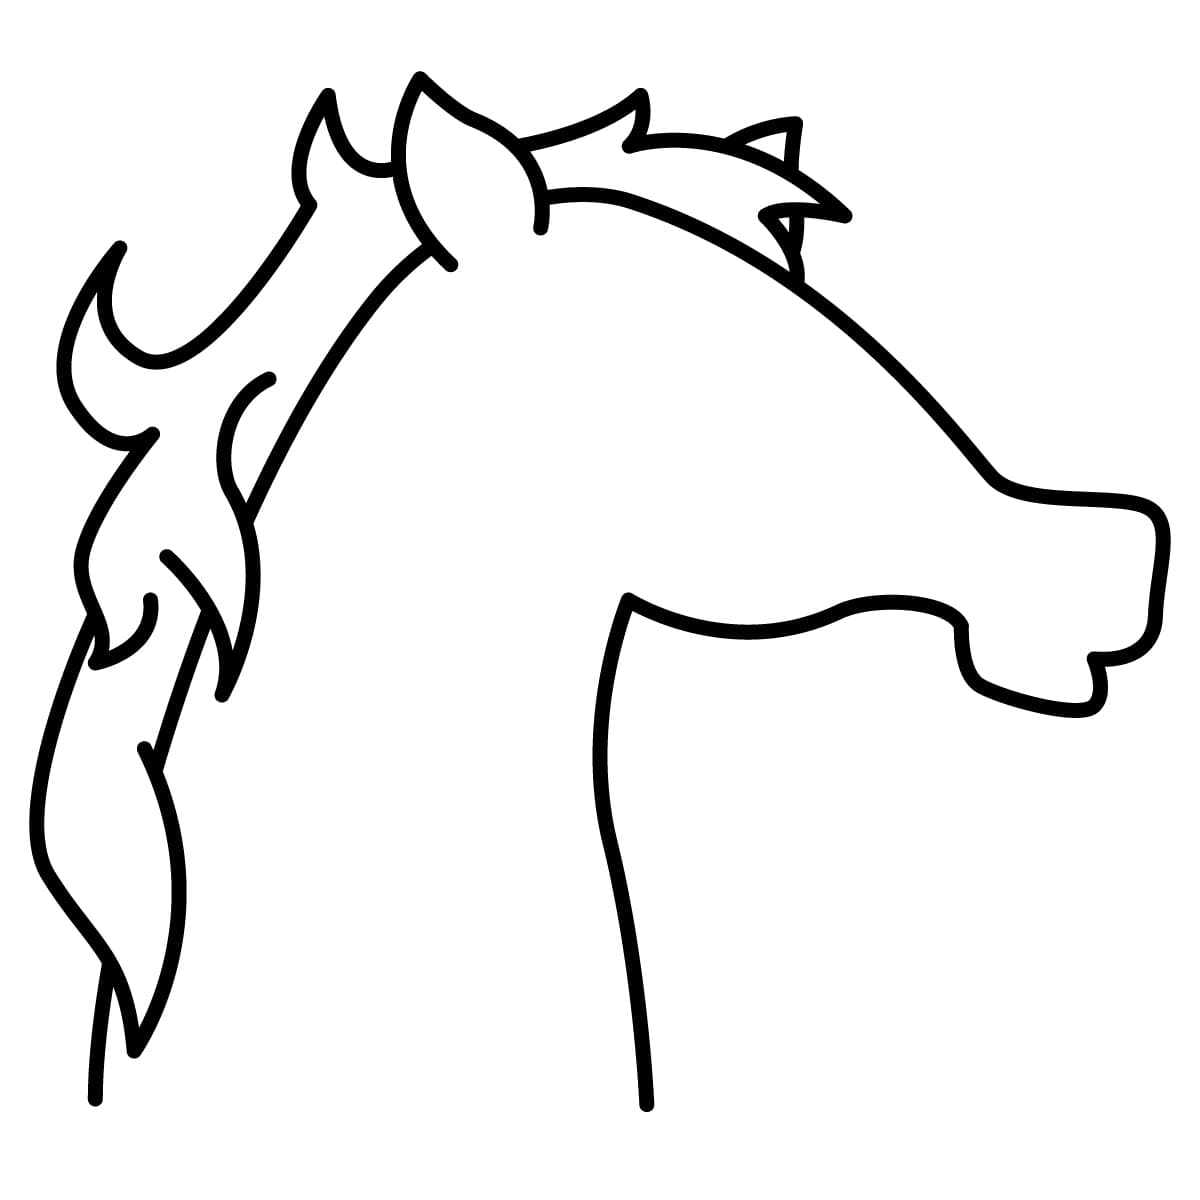 Dibujo de caballo para colorear e imprimir - Dibujos y colores